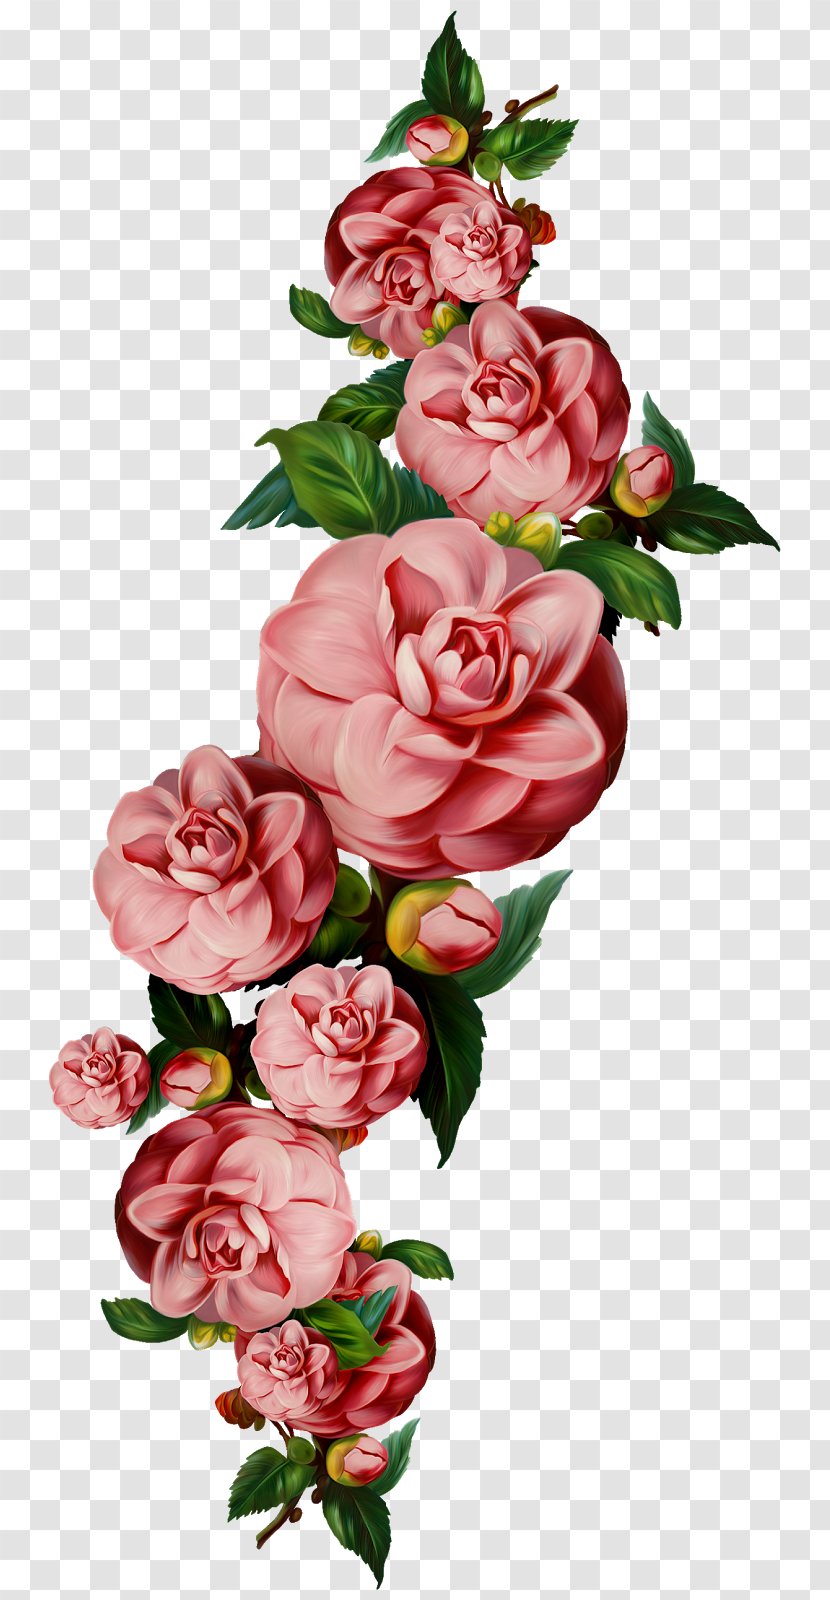 Flower Clip Art - Rose - Flowers Transparent PNG